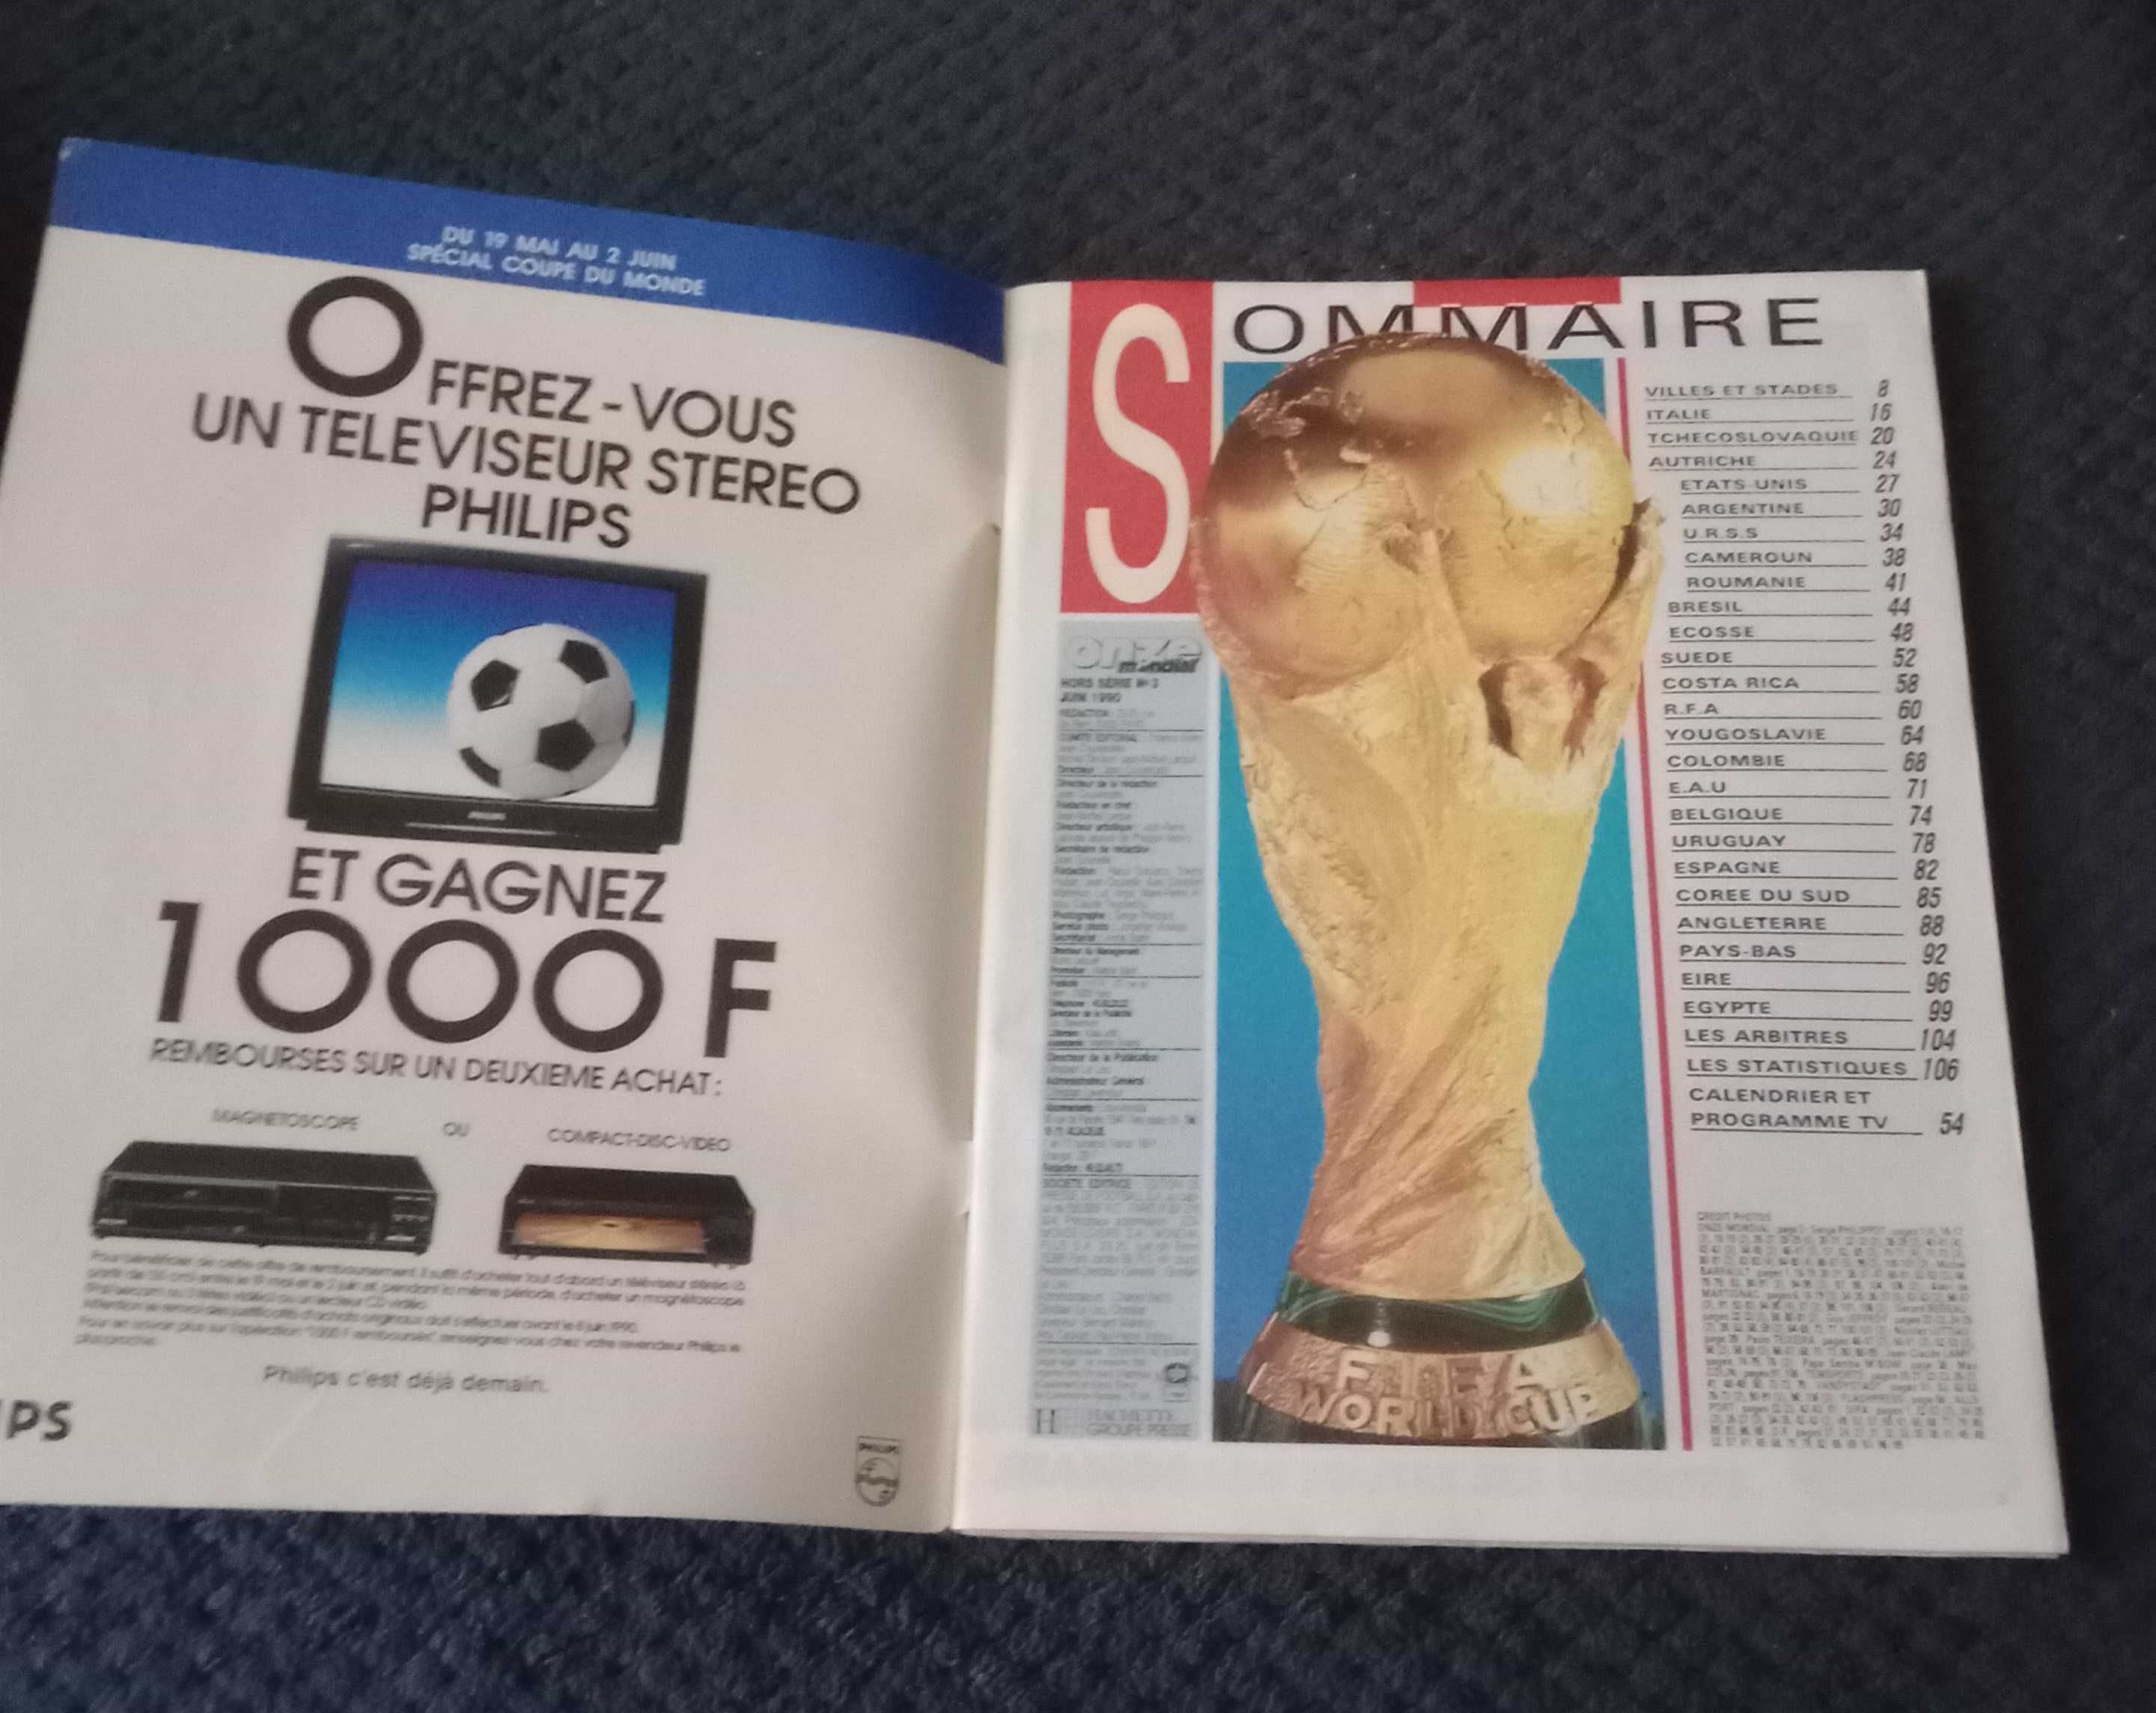 Revista Onze Mondial - Guia completo tudo do Mundial de 1990 - Serie 3